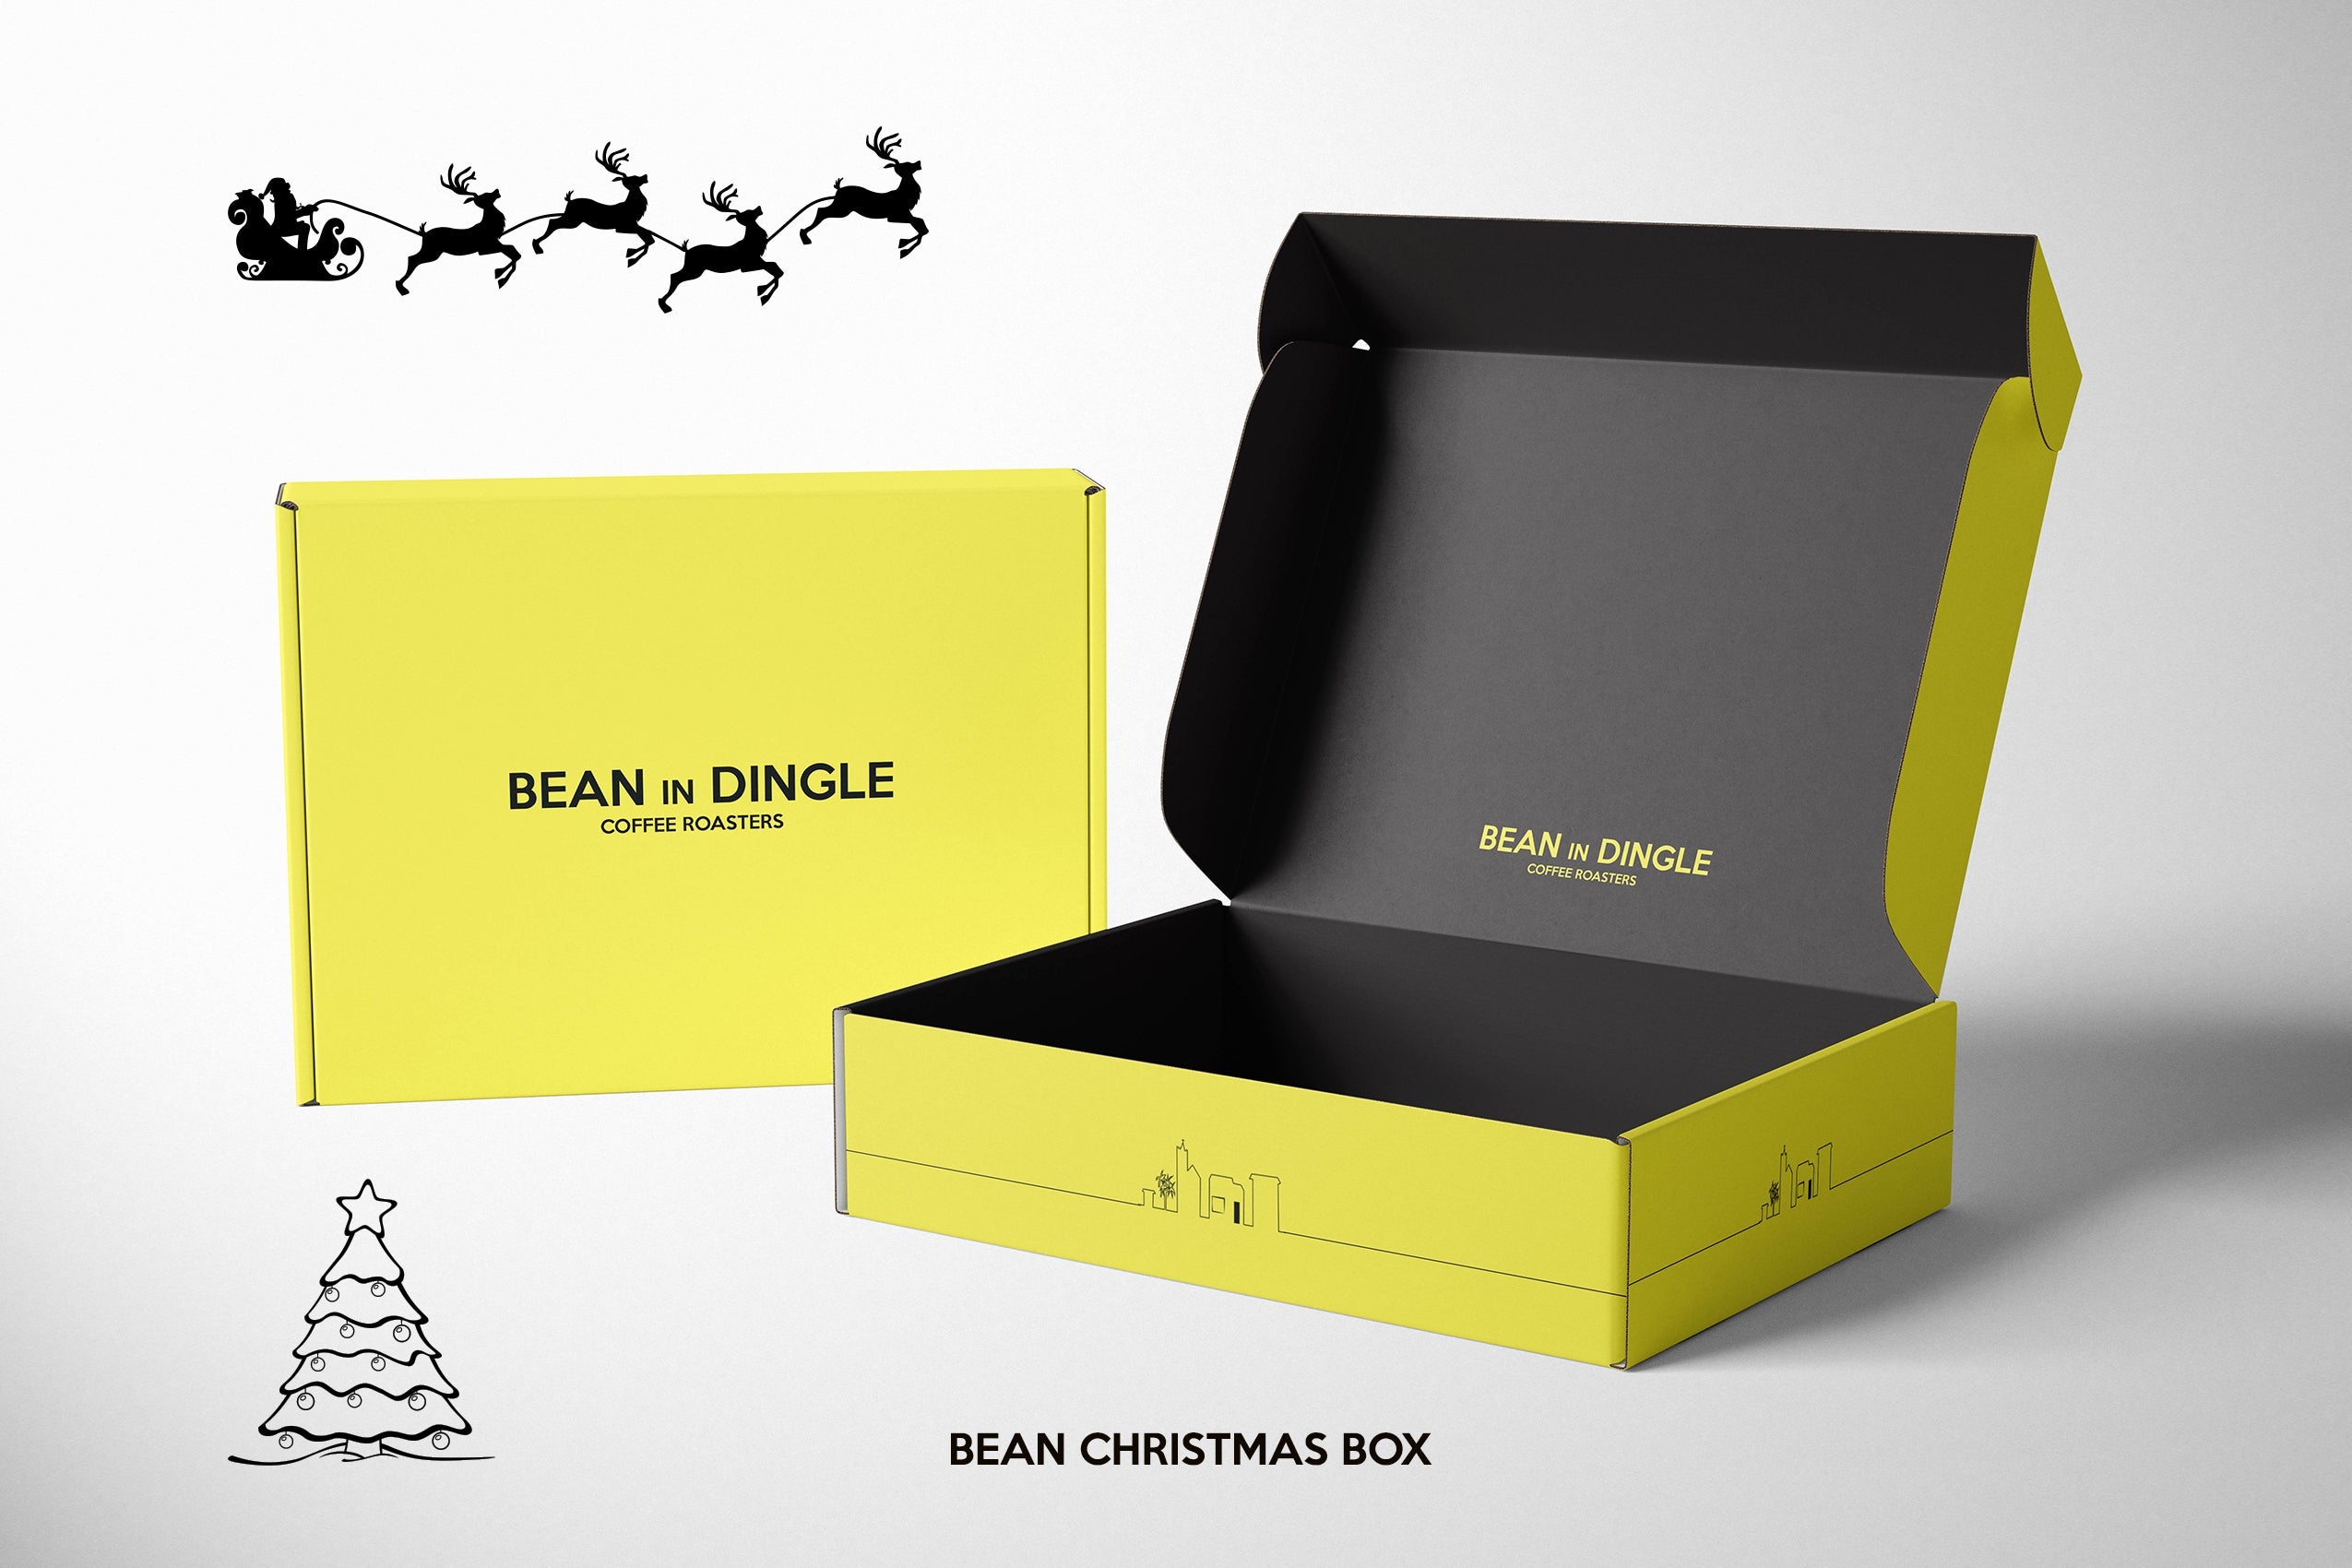 Bean Christmas Box - BEAN IN DINGLE